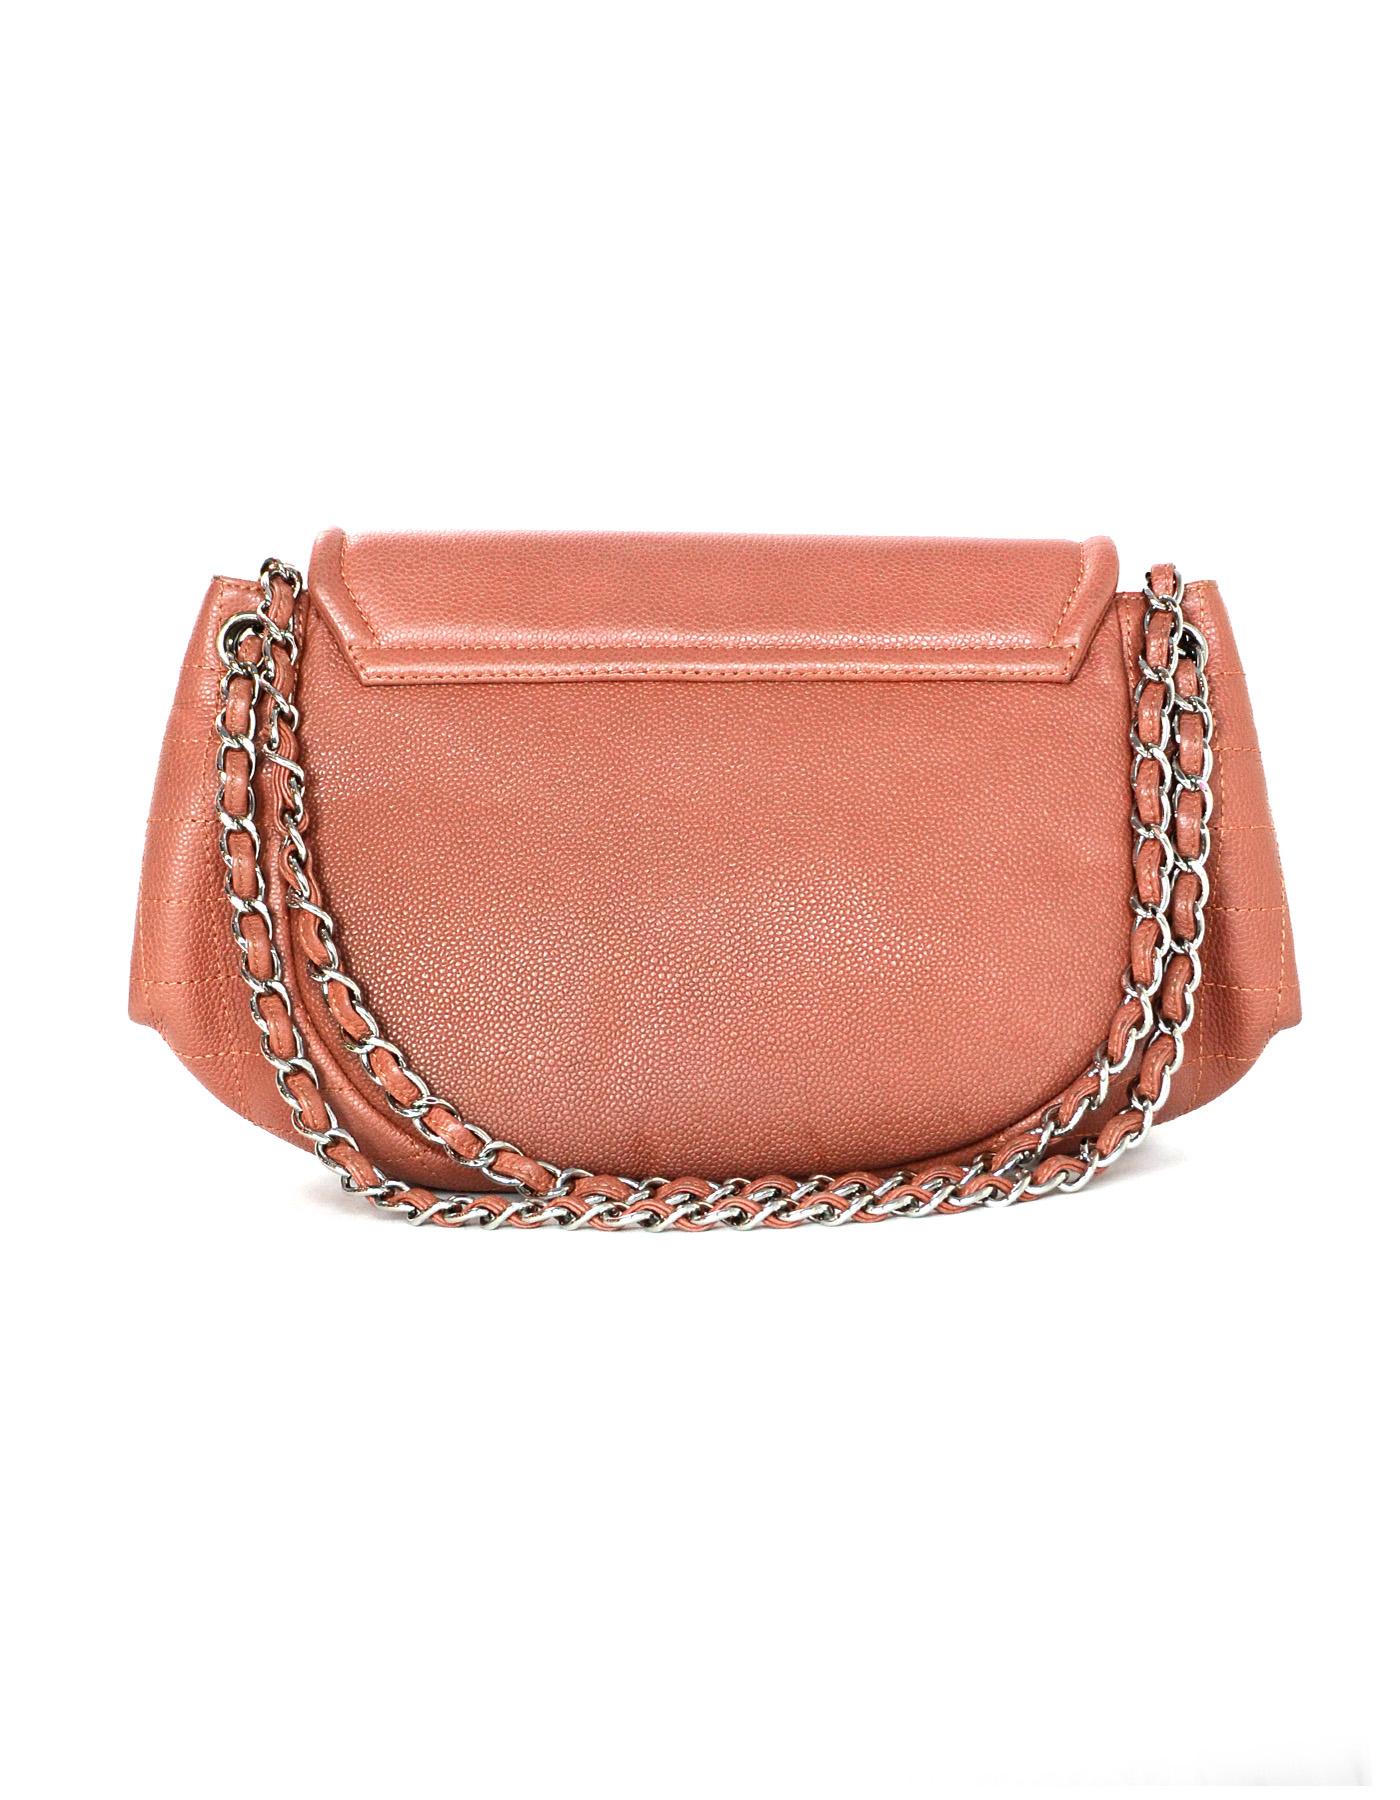 Women's Chanel Orange/Light Red Caviar Leather Half-Moon CC Flap Bag